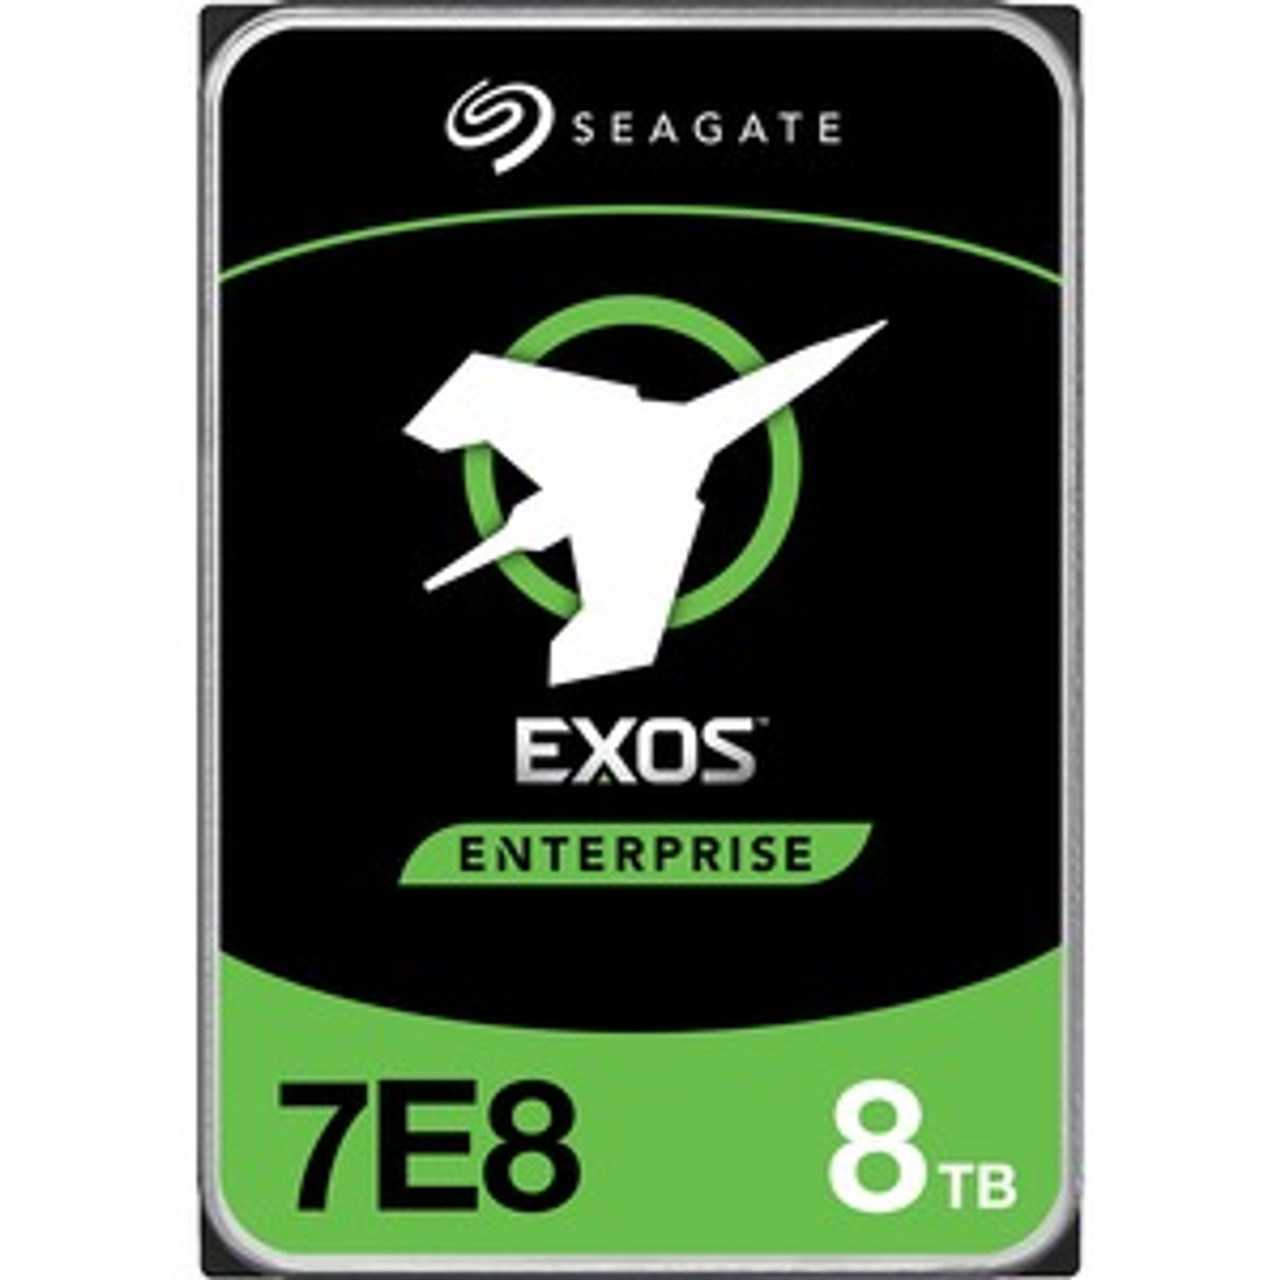 ST8000NM004A-20PK Seagate Exos 7E8 8TB 7200RPM SATA 6Gbps 256MB Cache (SED / 512e) 3.5-inch Internal Hard Drive (20-Pack)